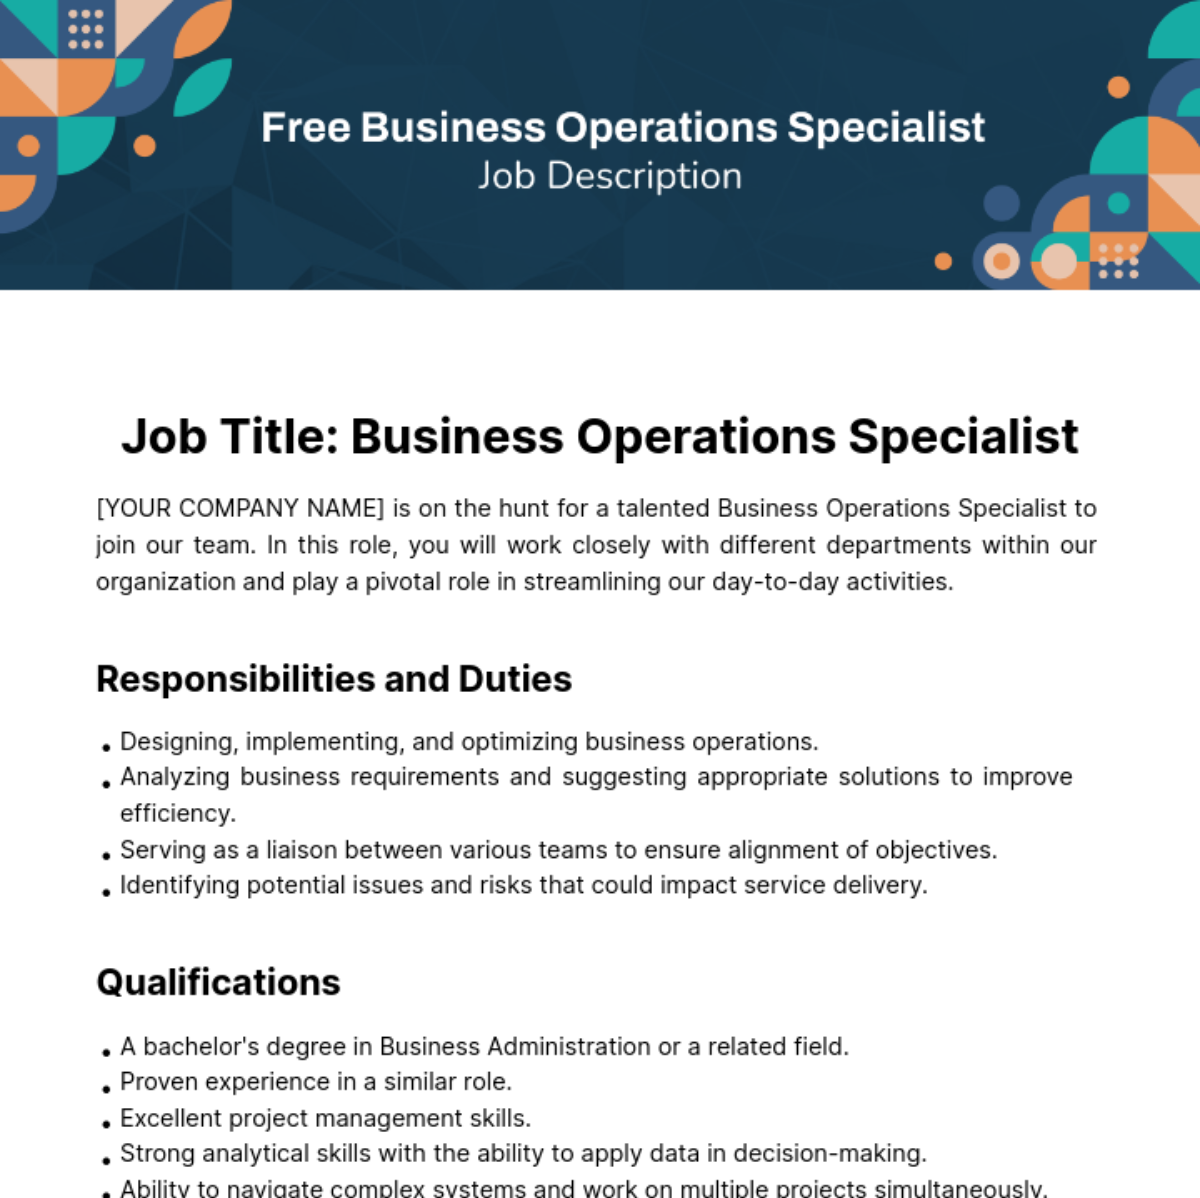 Business Operations Specialist Job Description Template